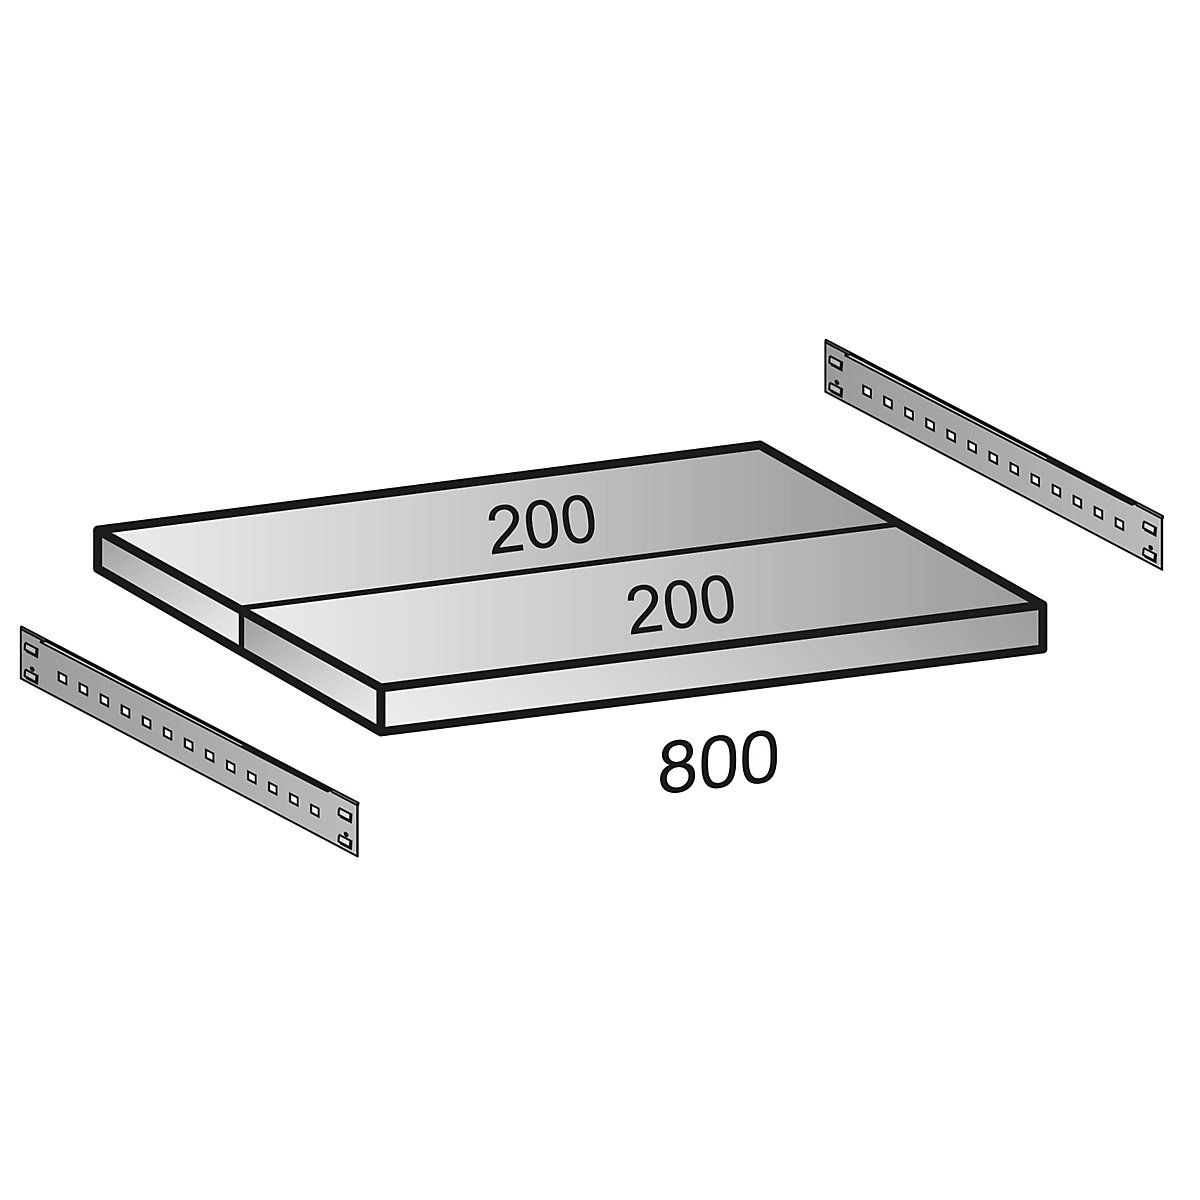 Shelf for industrial boltless shelf unit, shelf width 800 mm, depth 400 mm